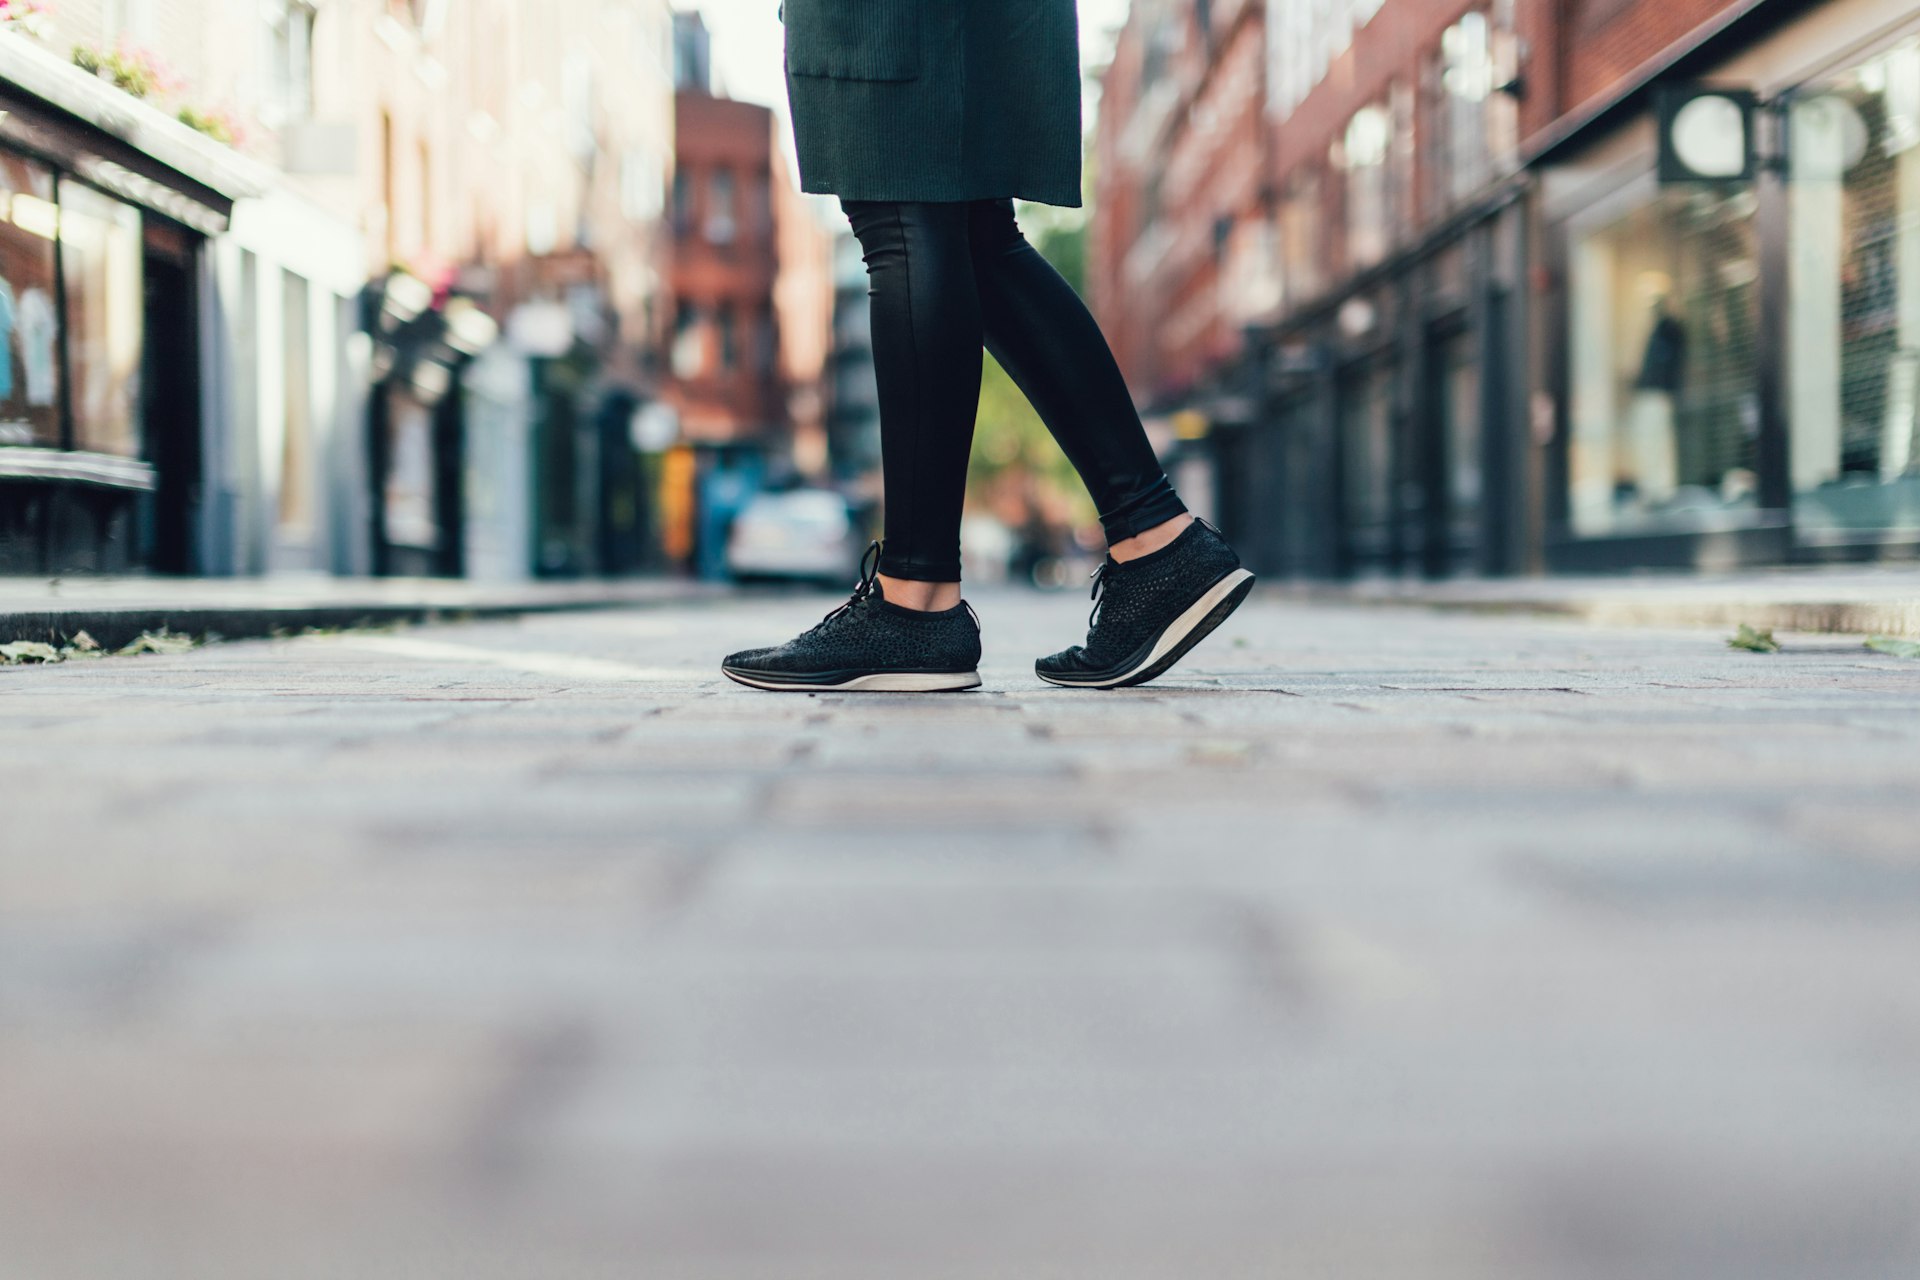 A knee-down shot of a woman walking across London streets in black tennis shoes